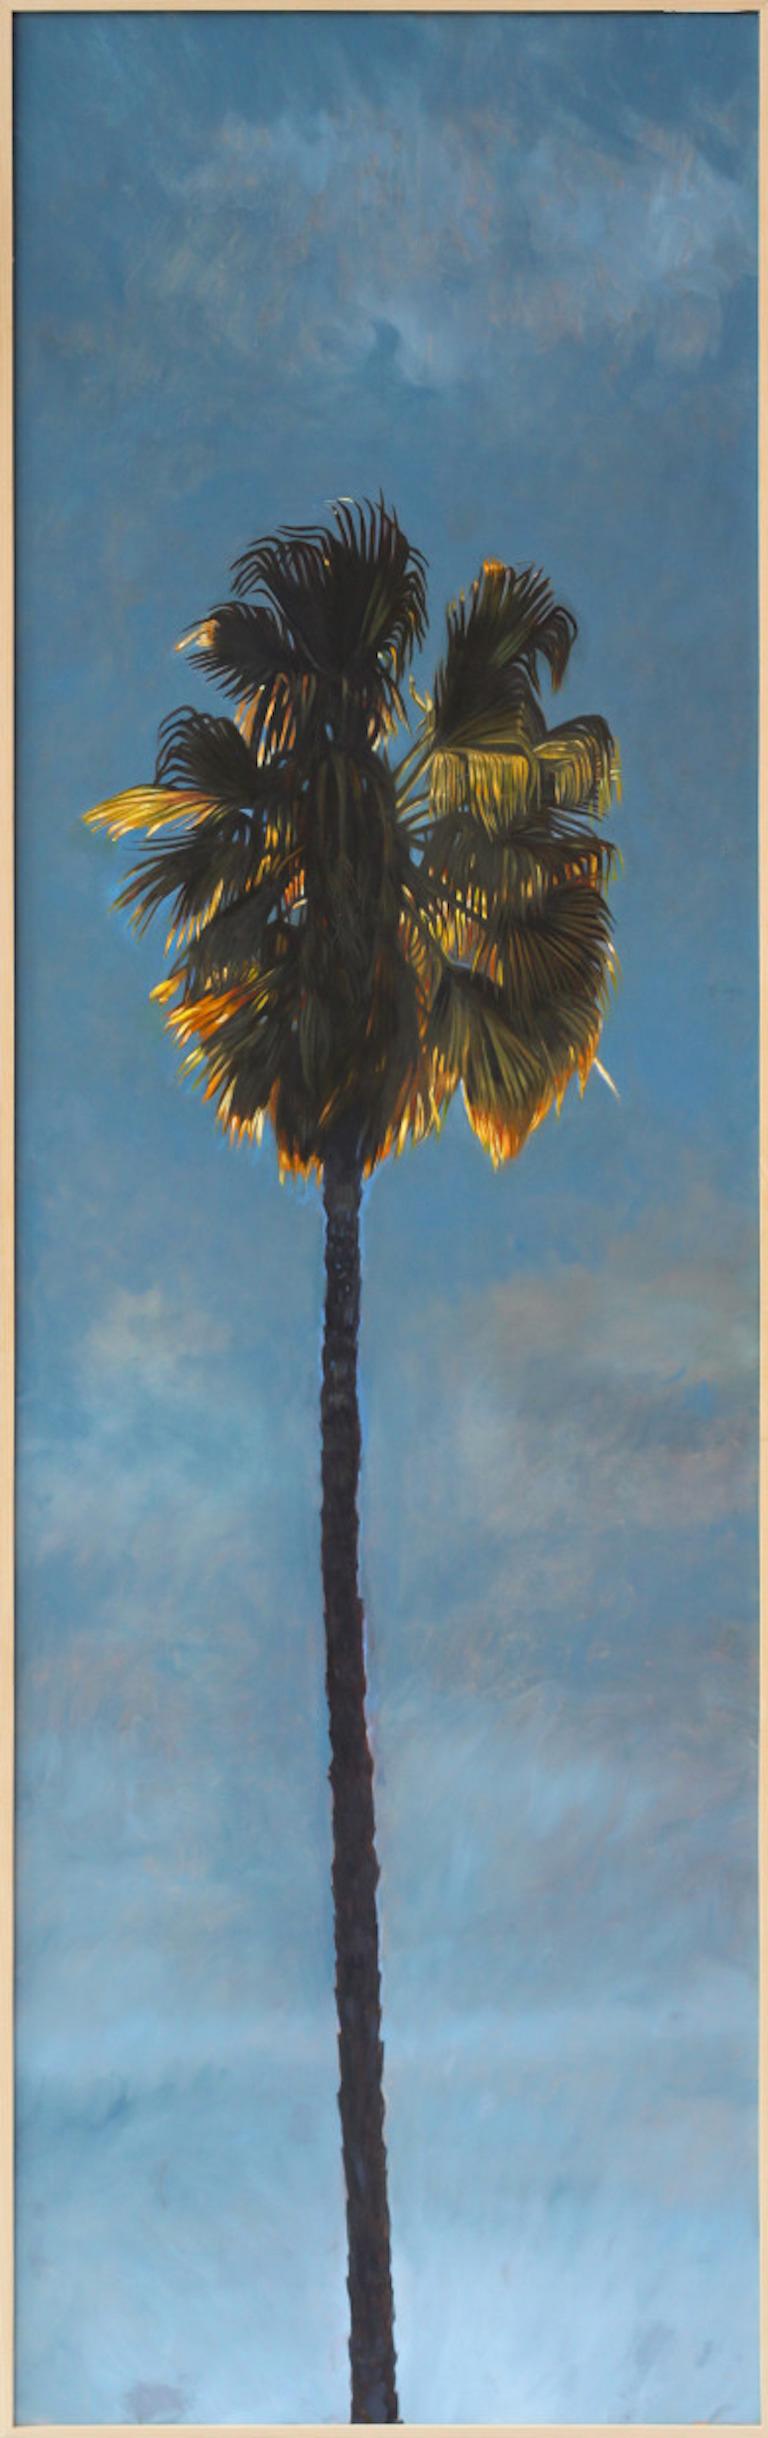 Perry Vàsquez Landscape Painting - Contemporary Conceptual Palm Tree Painting, "Failing Light"